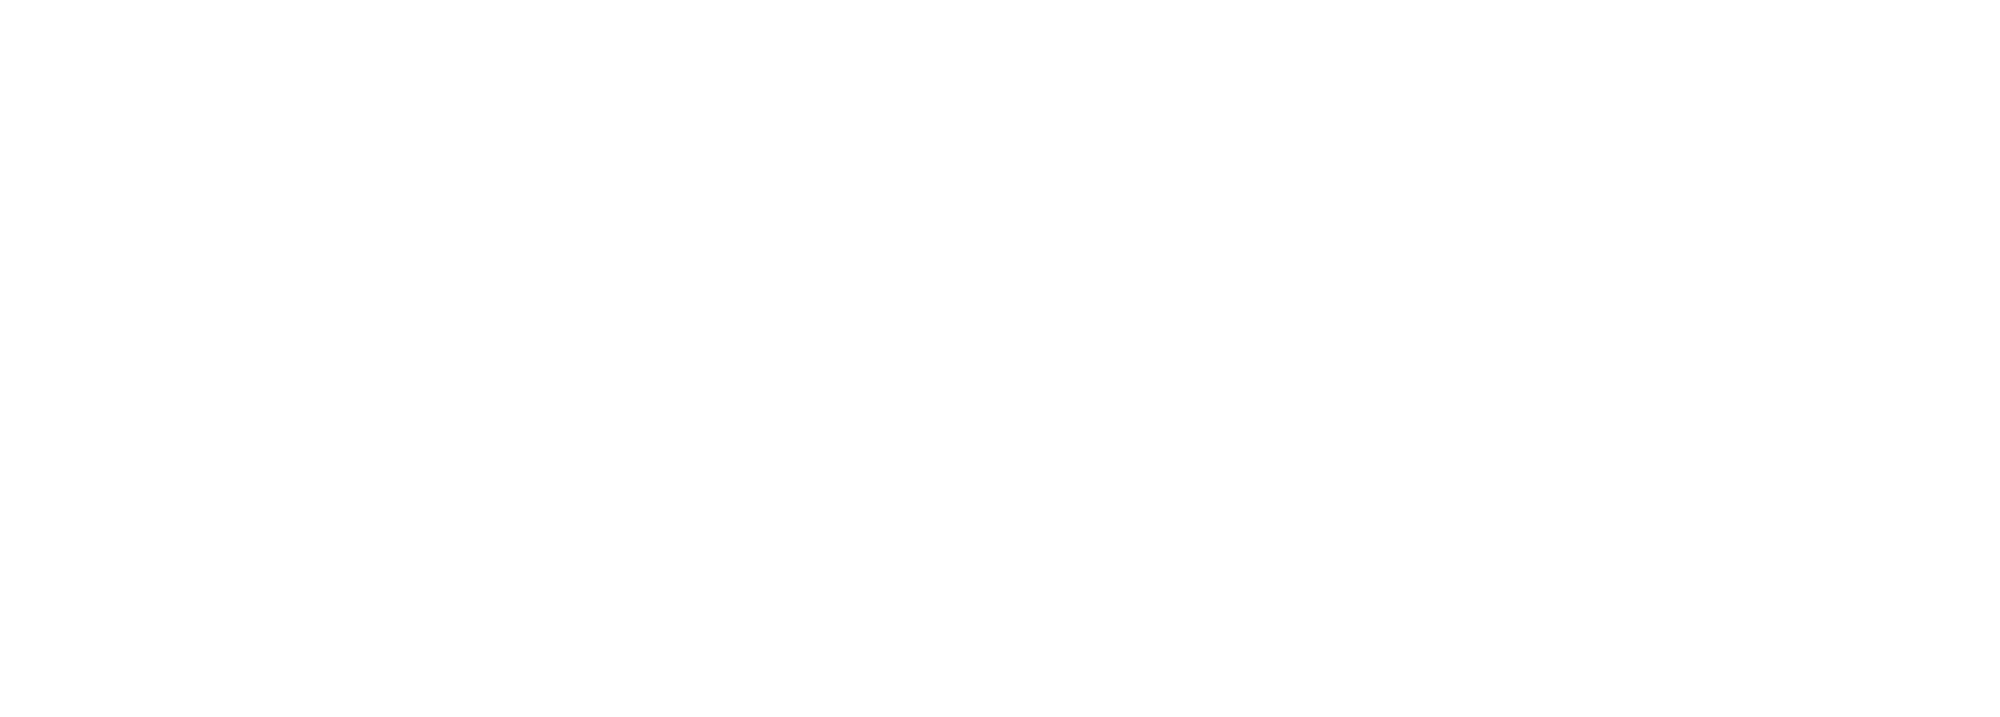 chelsea-locksmiths-ltd-high-resolution-logo-white-transparent